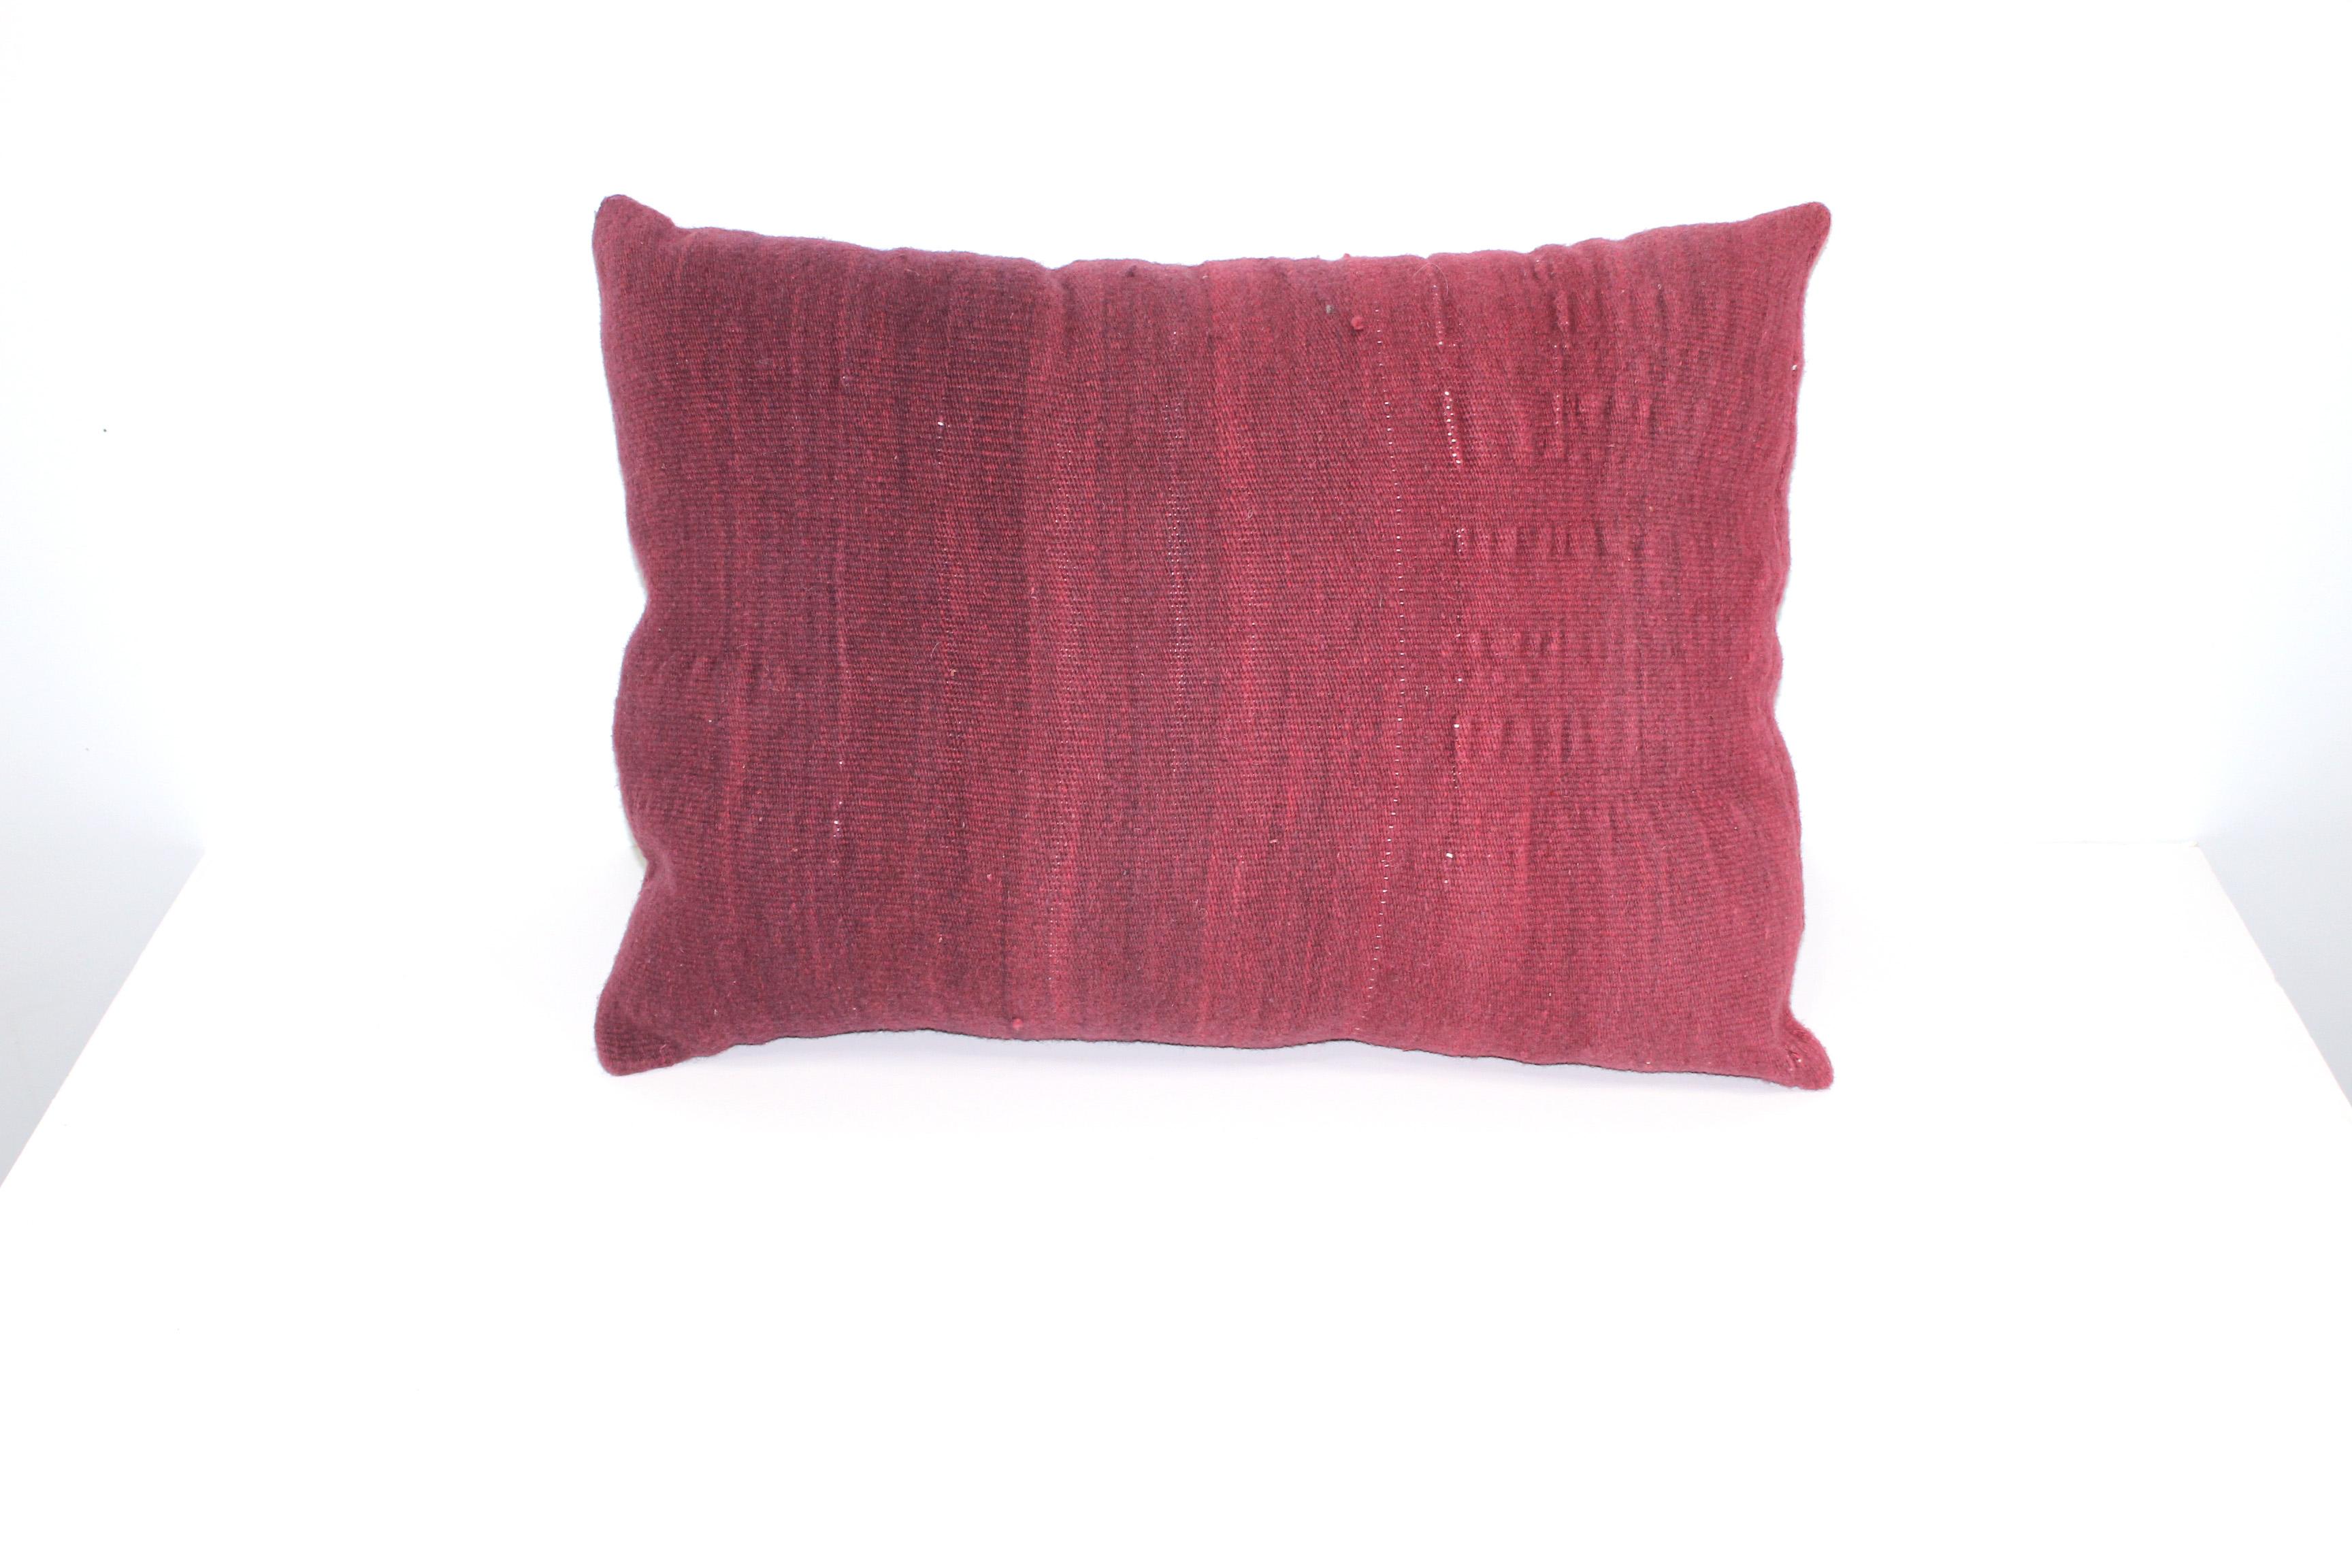 Hand-Woven Bespoke Handwoven Wool Throw Pillow, Natural Dye, Maroon and Cream